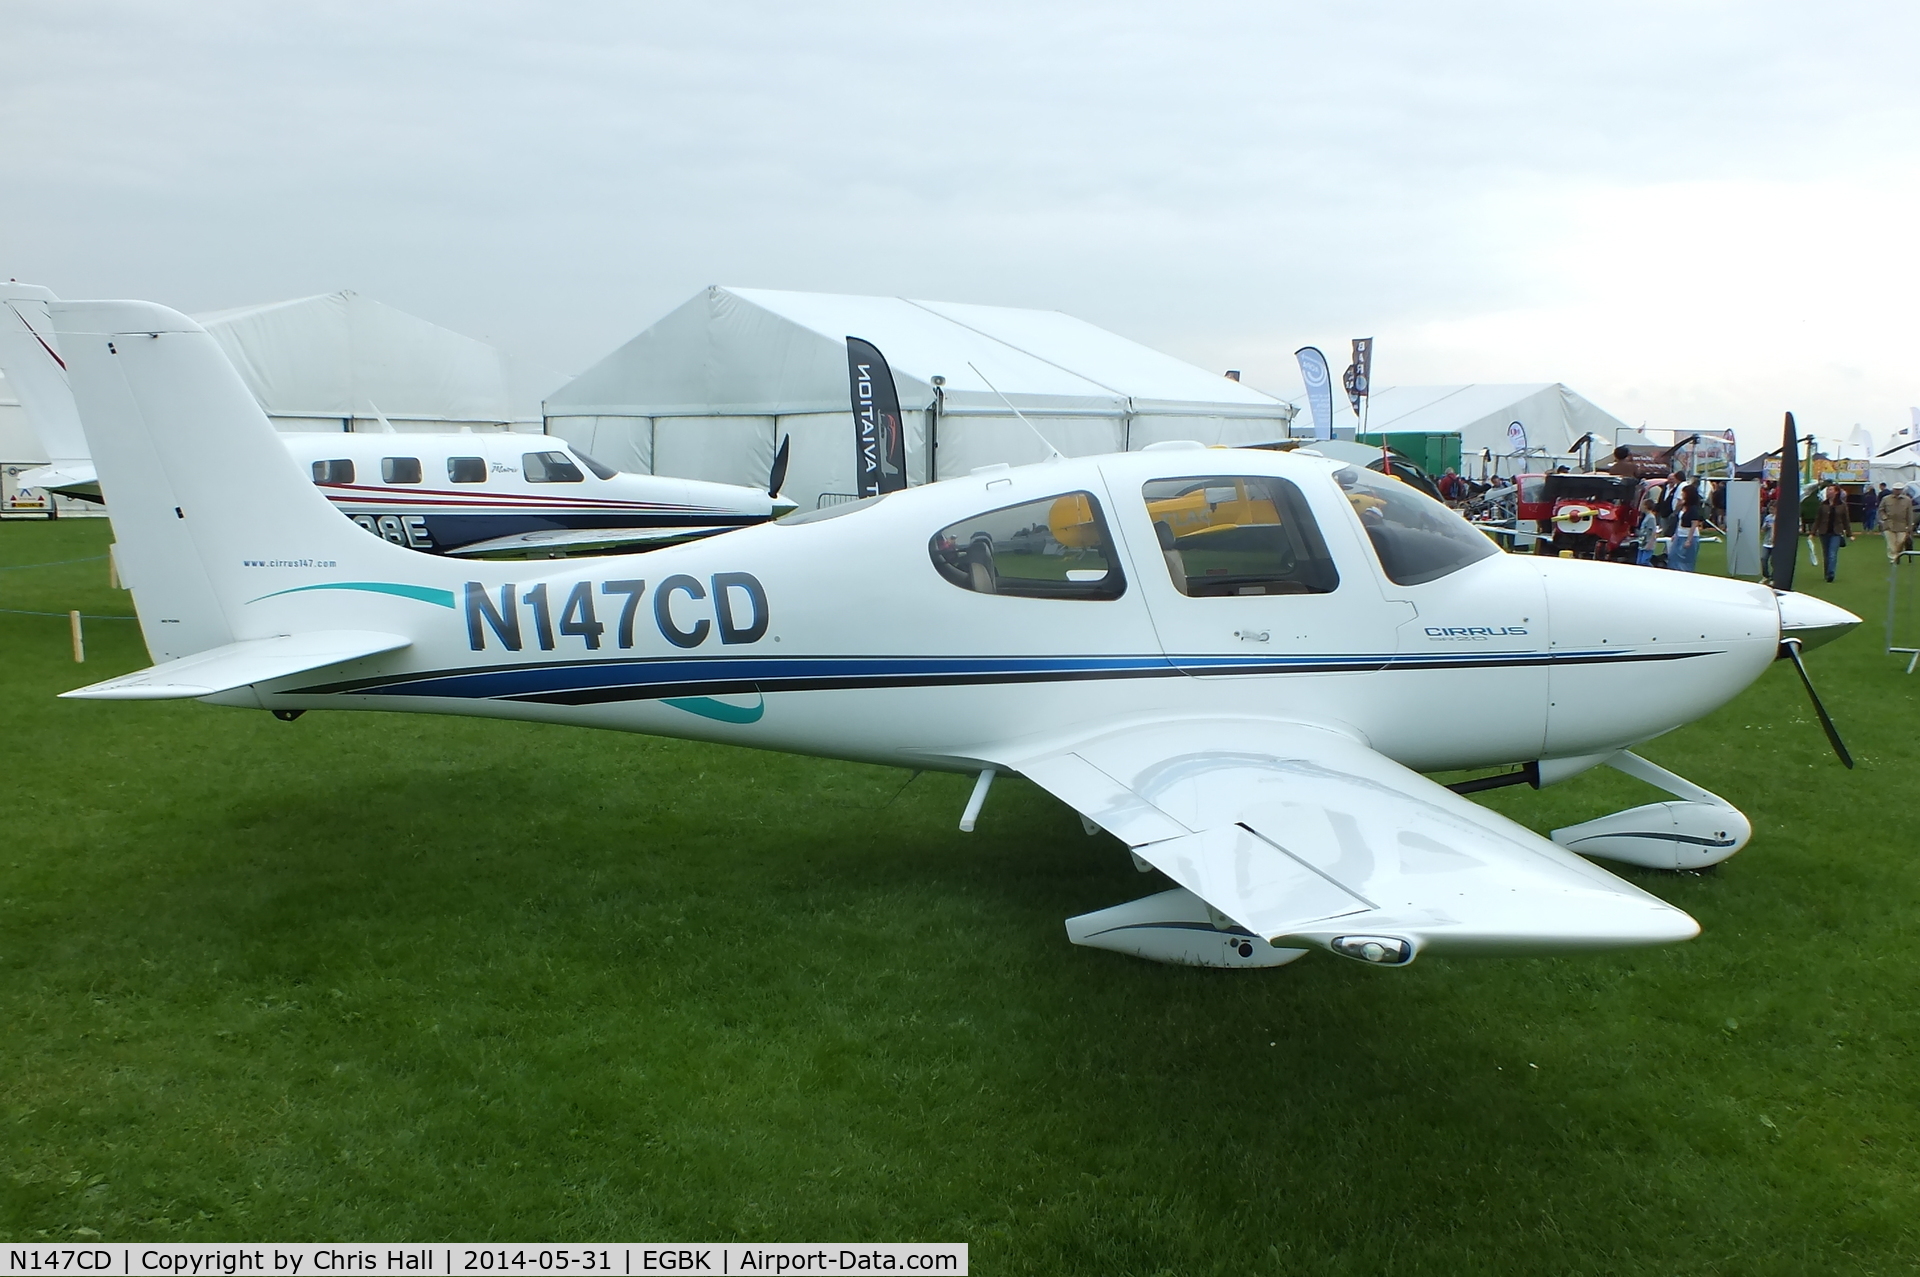 N147CD, 2000 Cirrus SR20 C/N 1043, at AeroExpo 2014